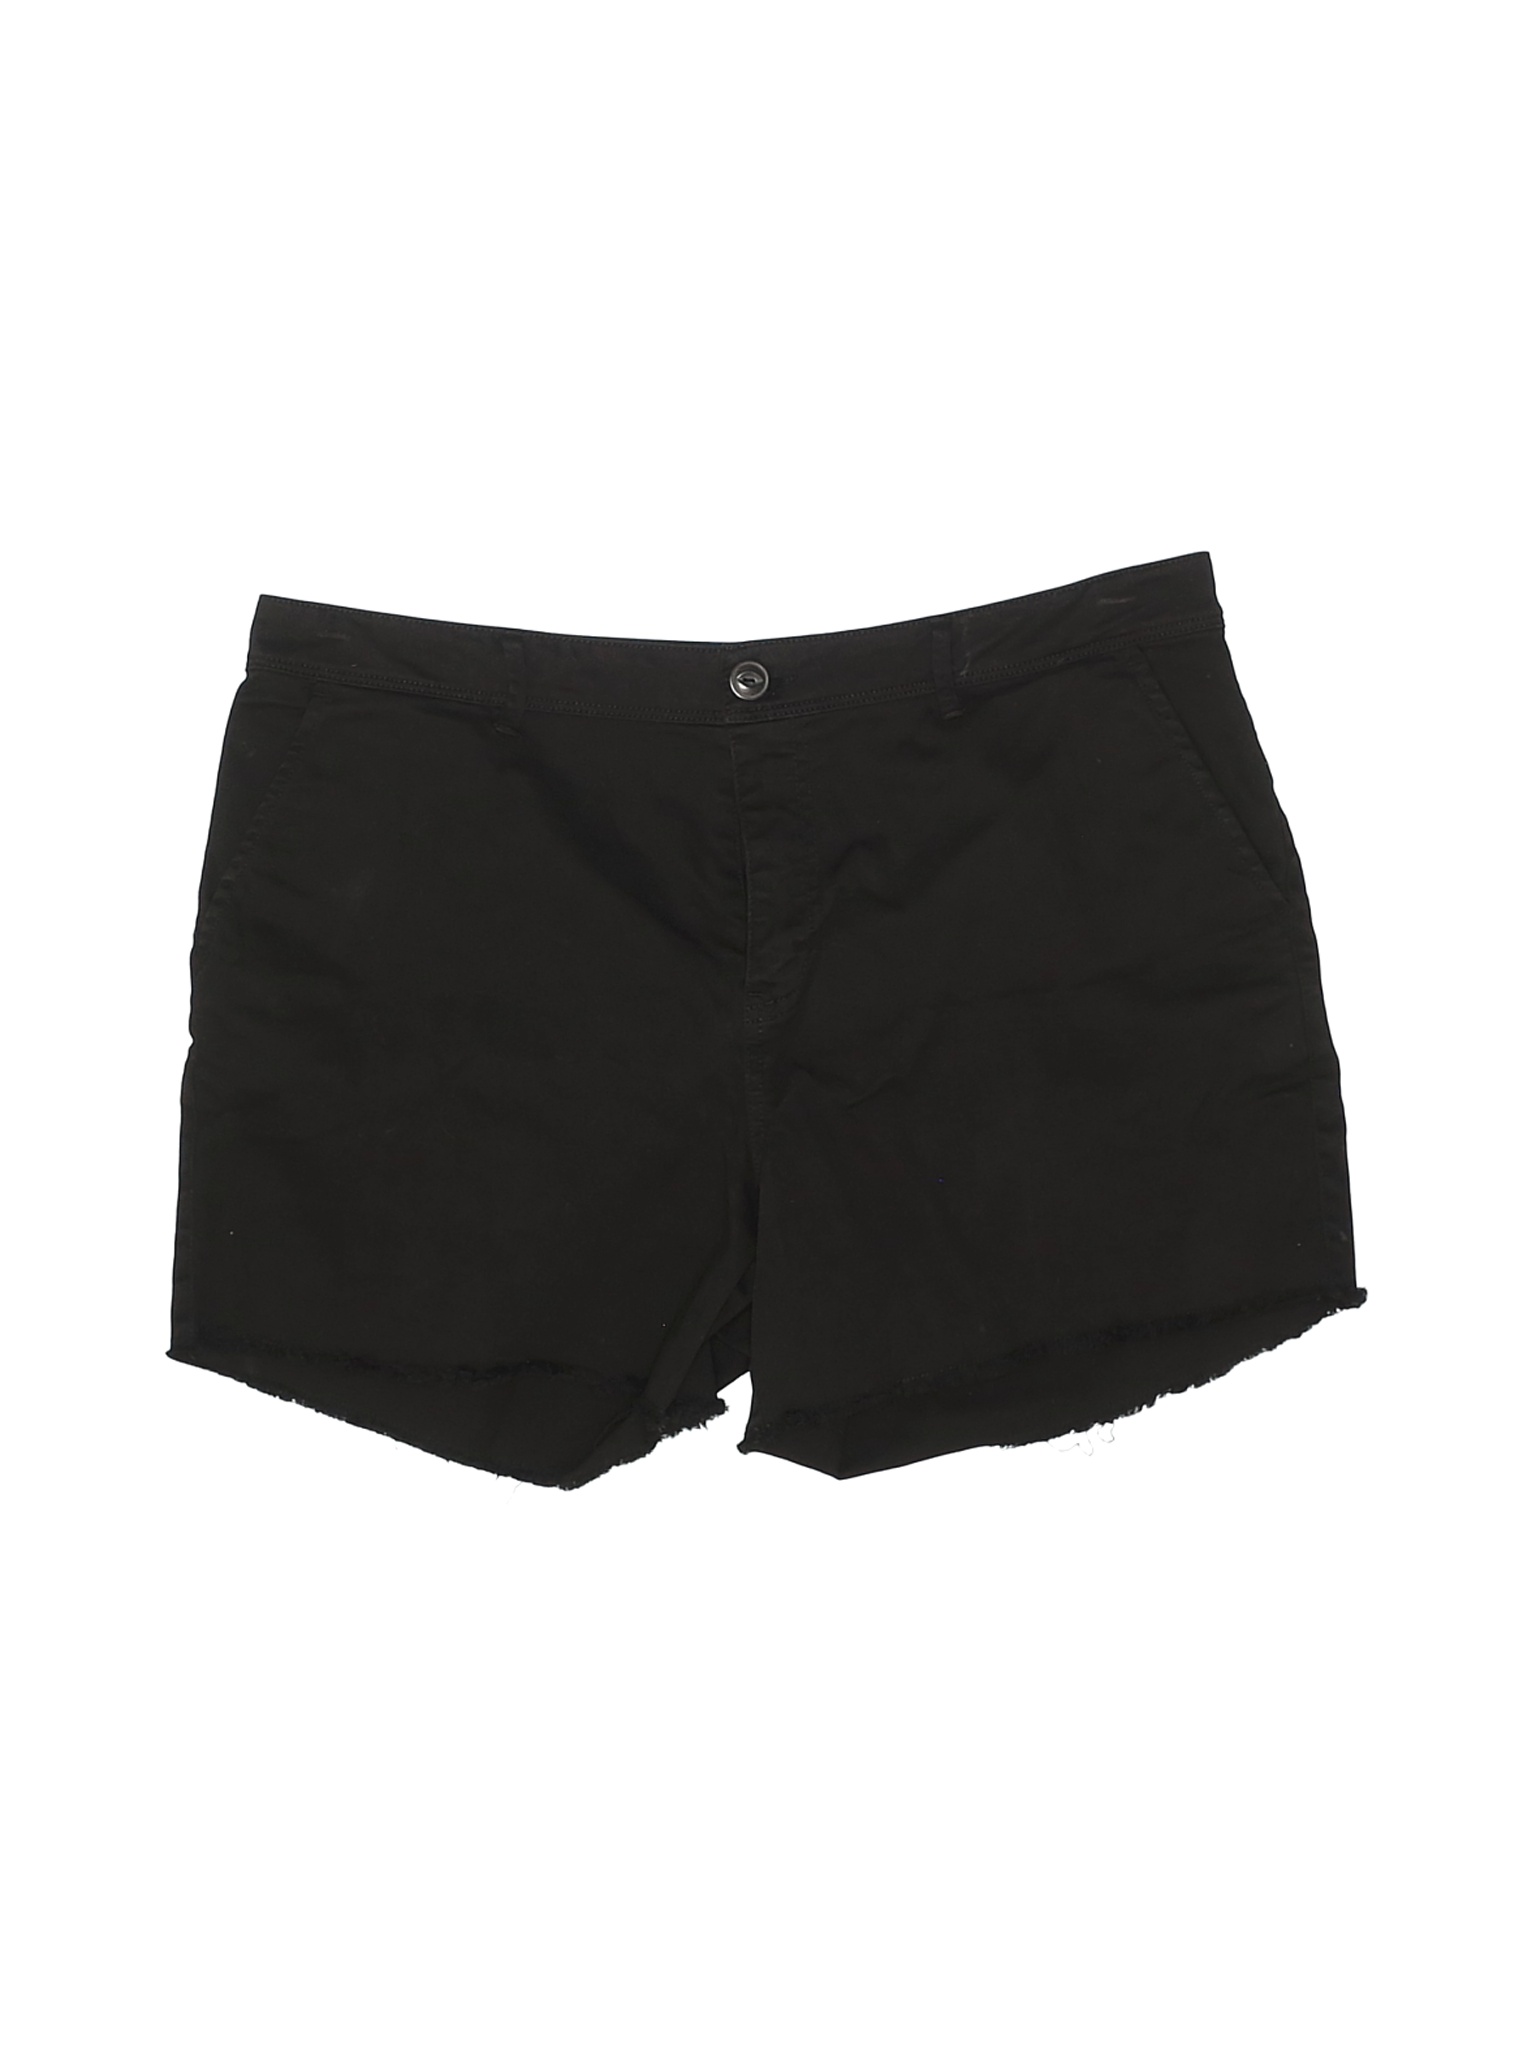 Sanctuary Women Black Khaki Shorts 32W | eBay